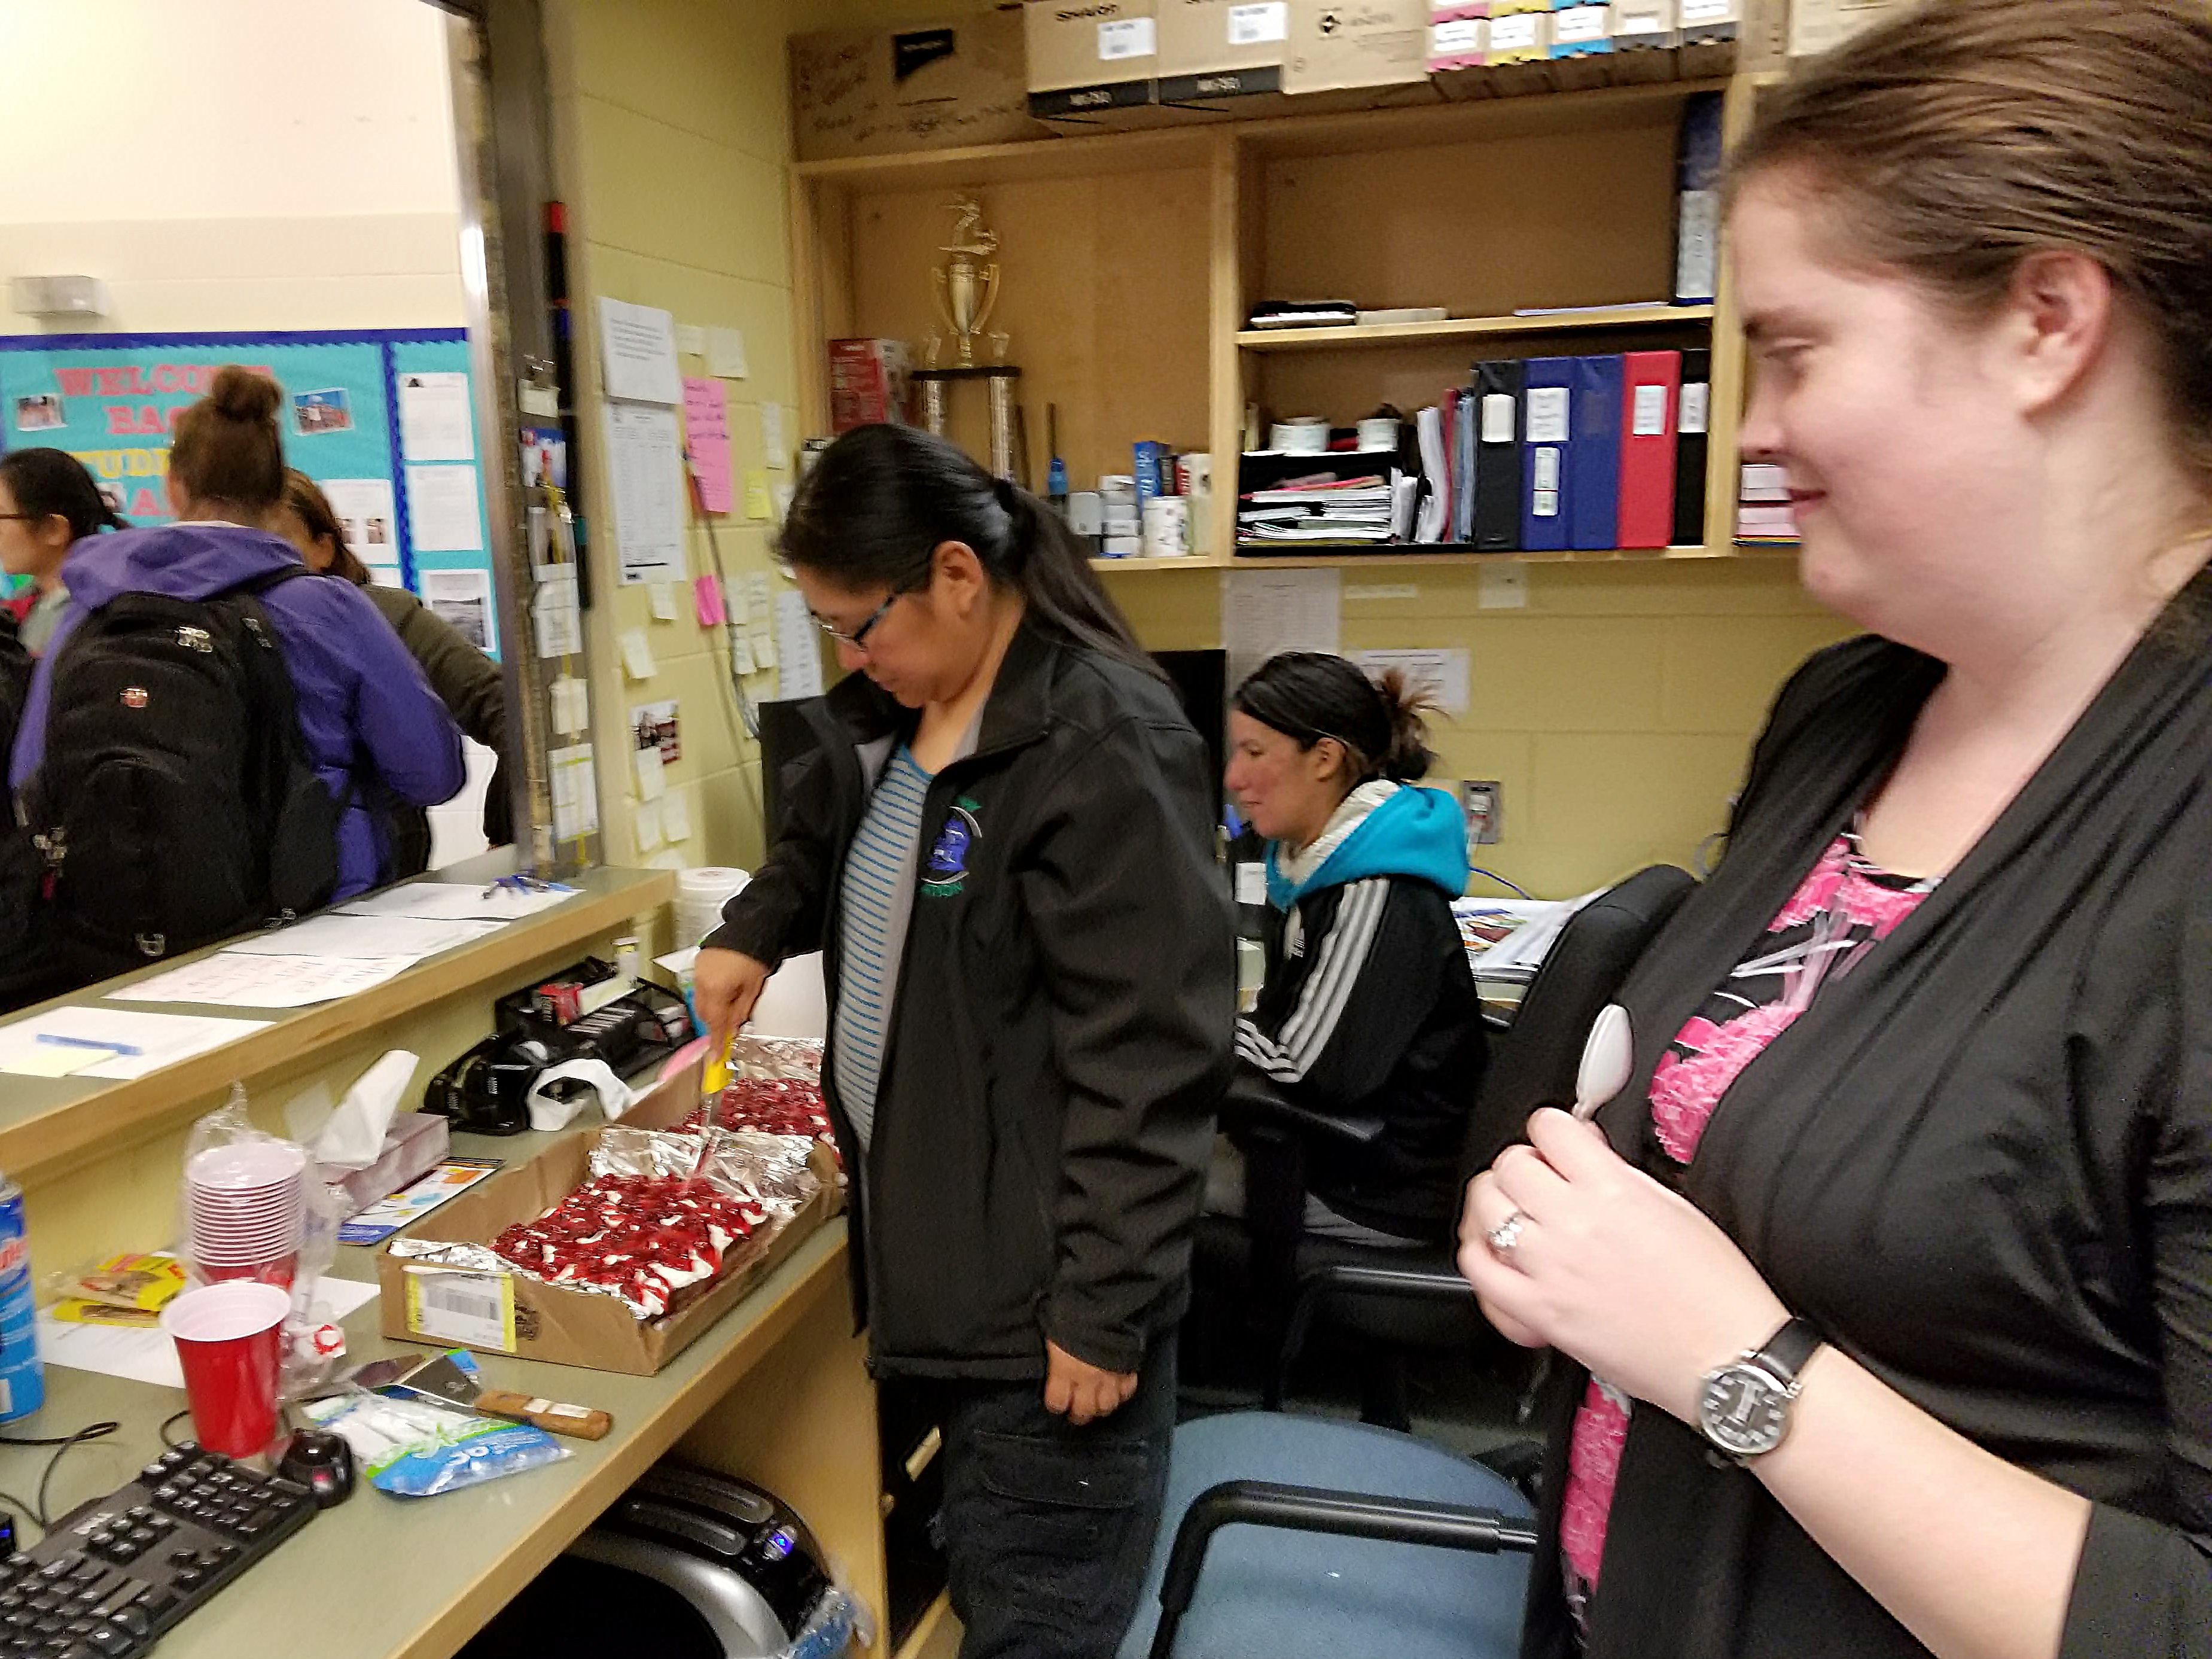 School staff celebrating Kelly's birthday with a cake